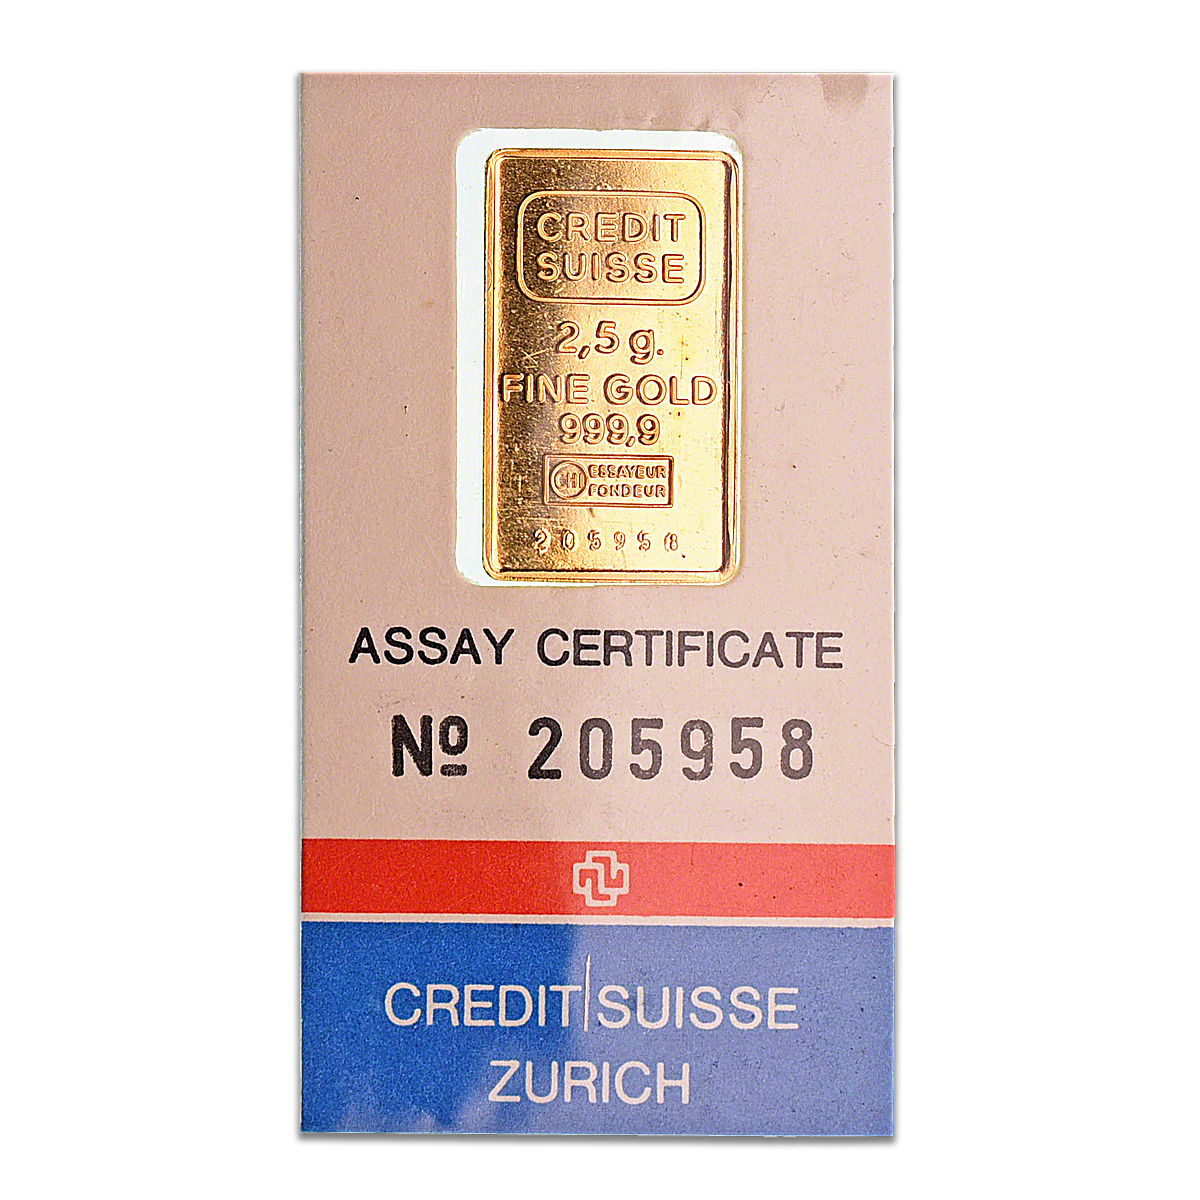 credit suisse gold bar packaging